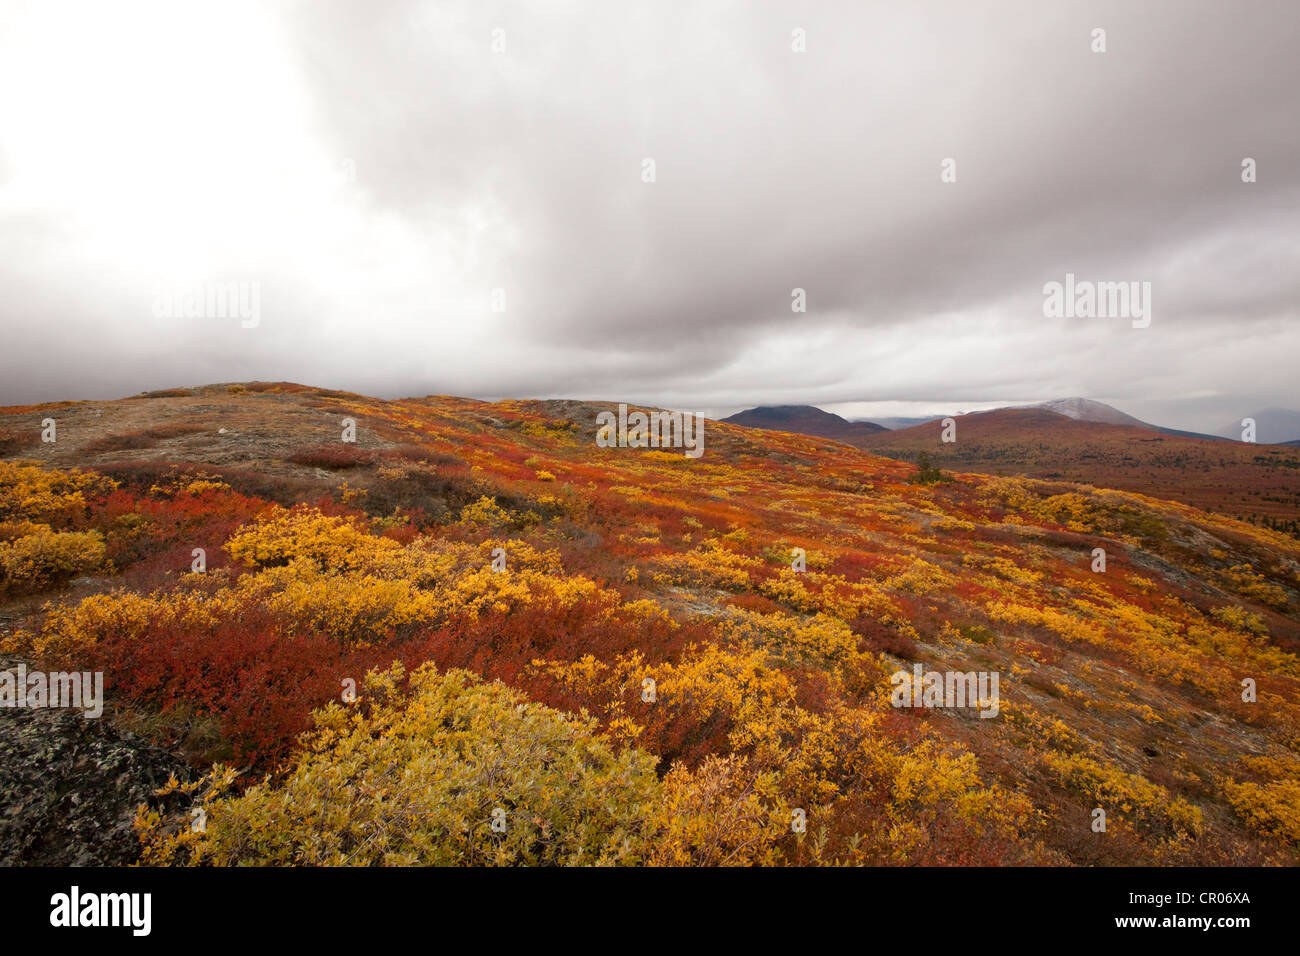 Sub-alpine tundra, Indian summer, leaves in fall colours, autumn, near Fish Lake, Yukon Territory, Canada Stock Photo